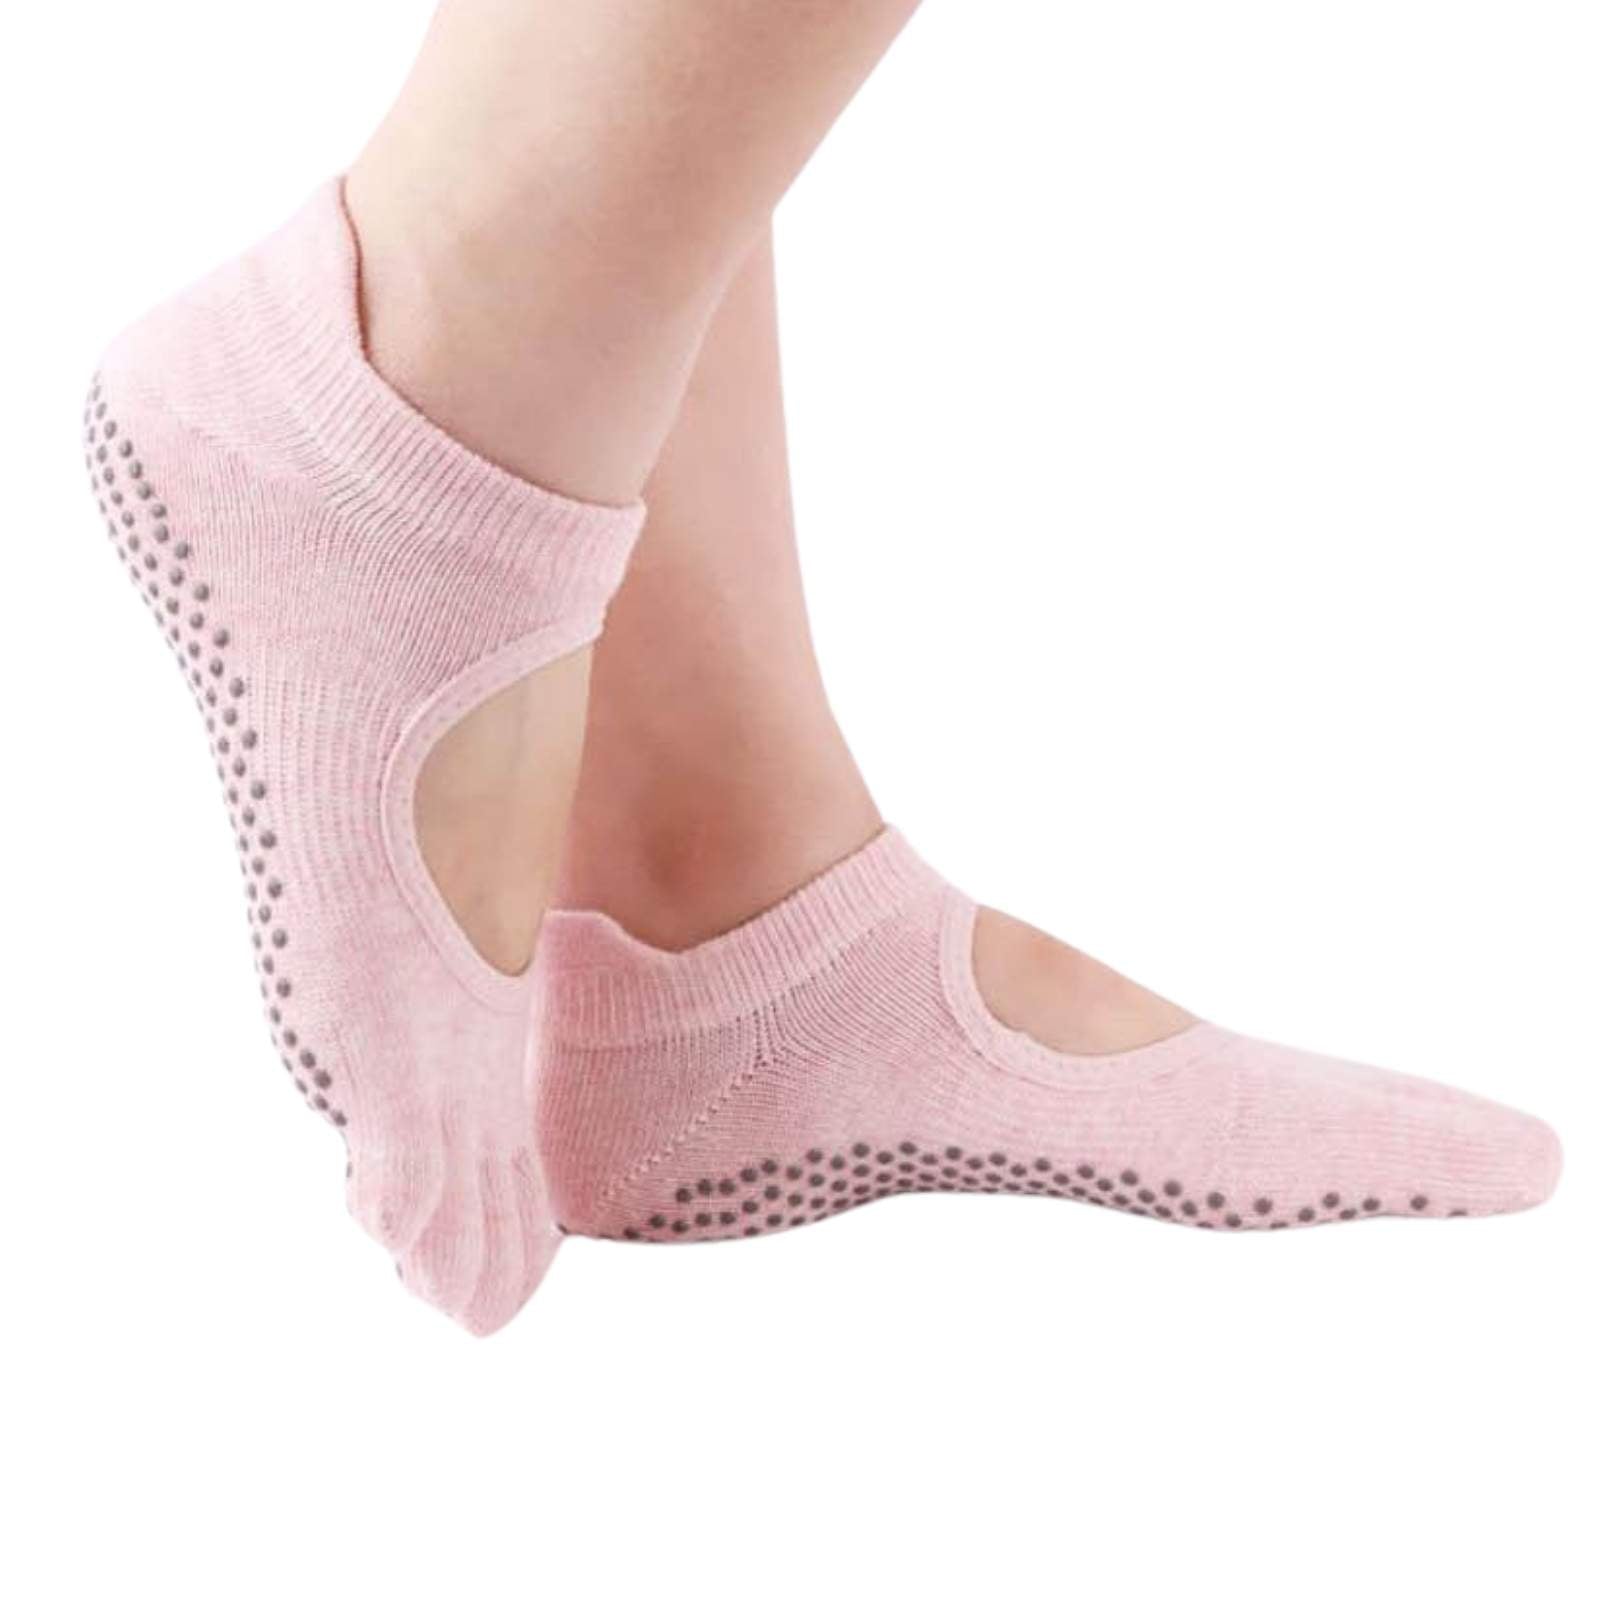 2 Pairs Yoga Socks For Women With Grips, Non-slip Five Toe Socks